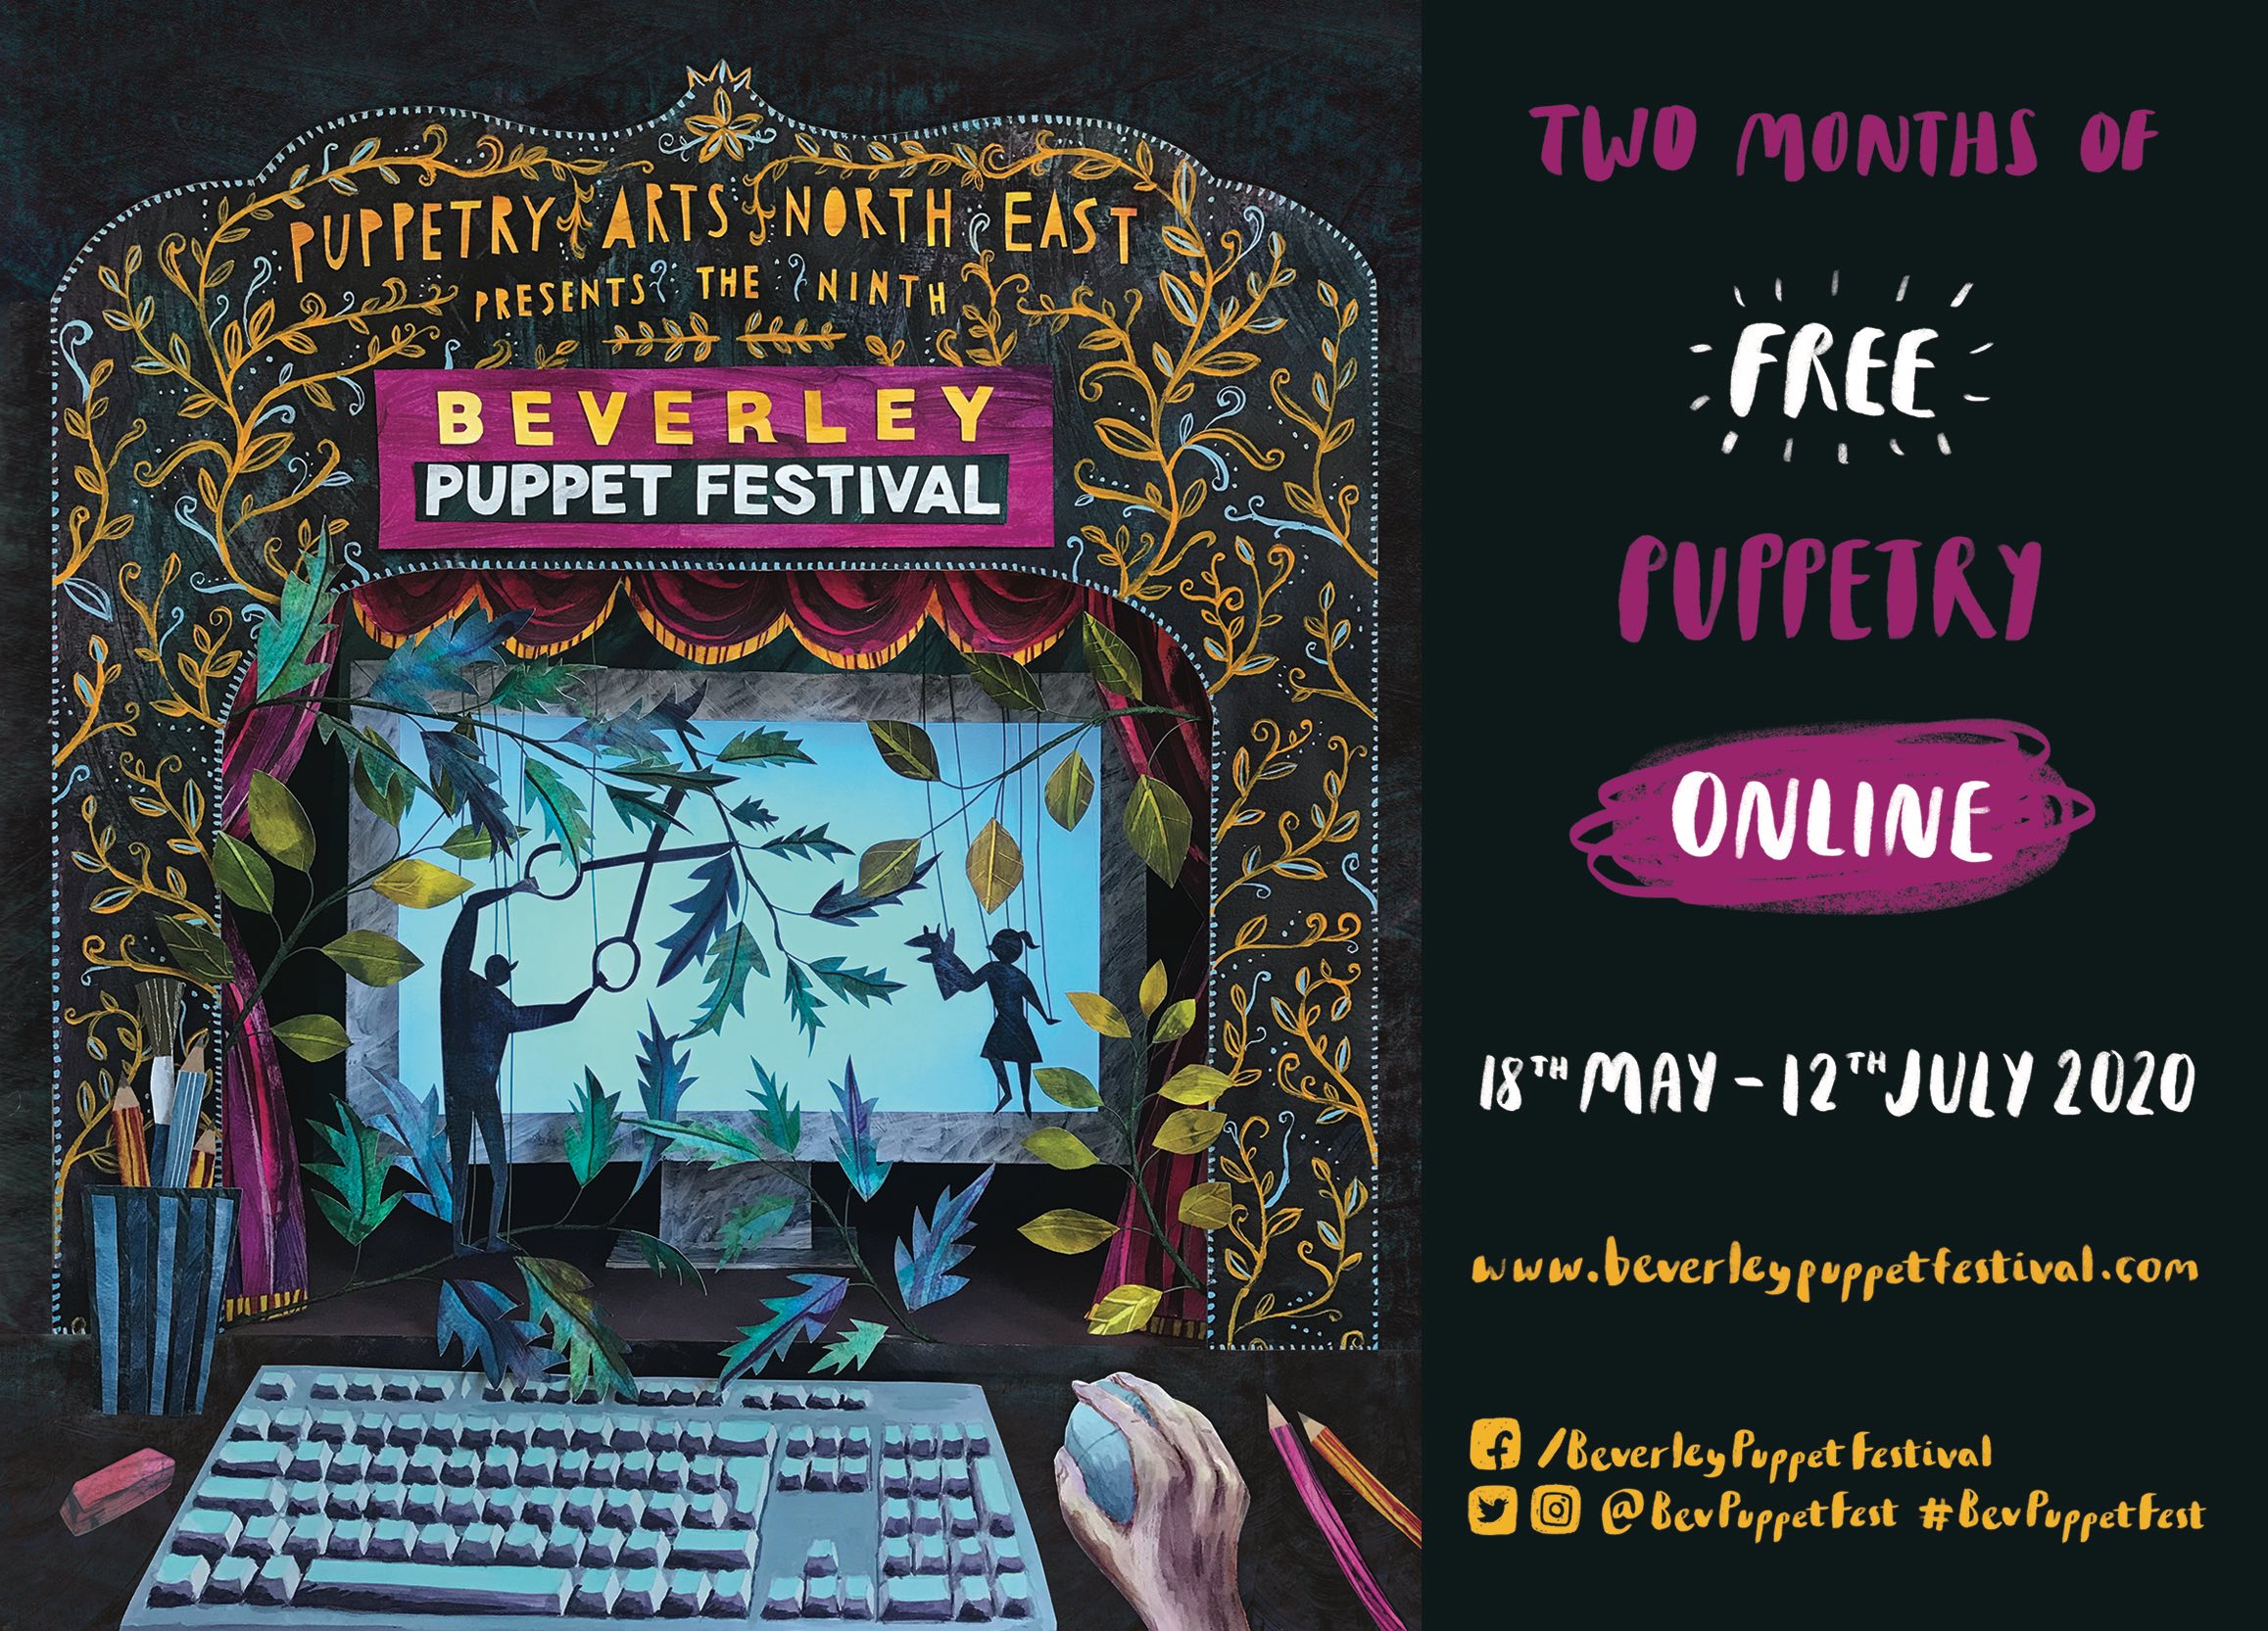 Beverley Puppet Festival, Beverley, East Riding of Yorkshire, United Kingdom